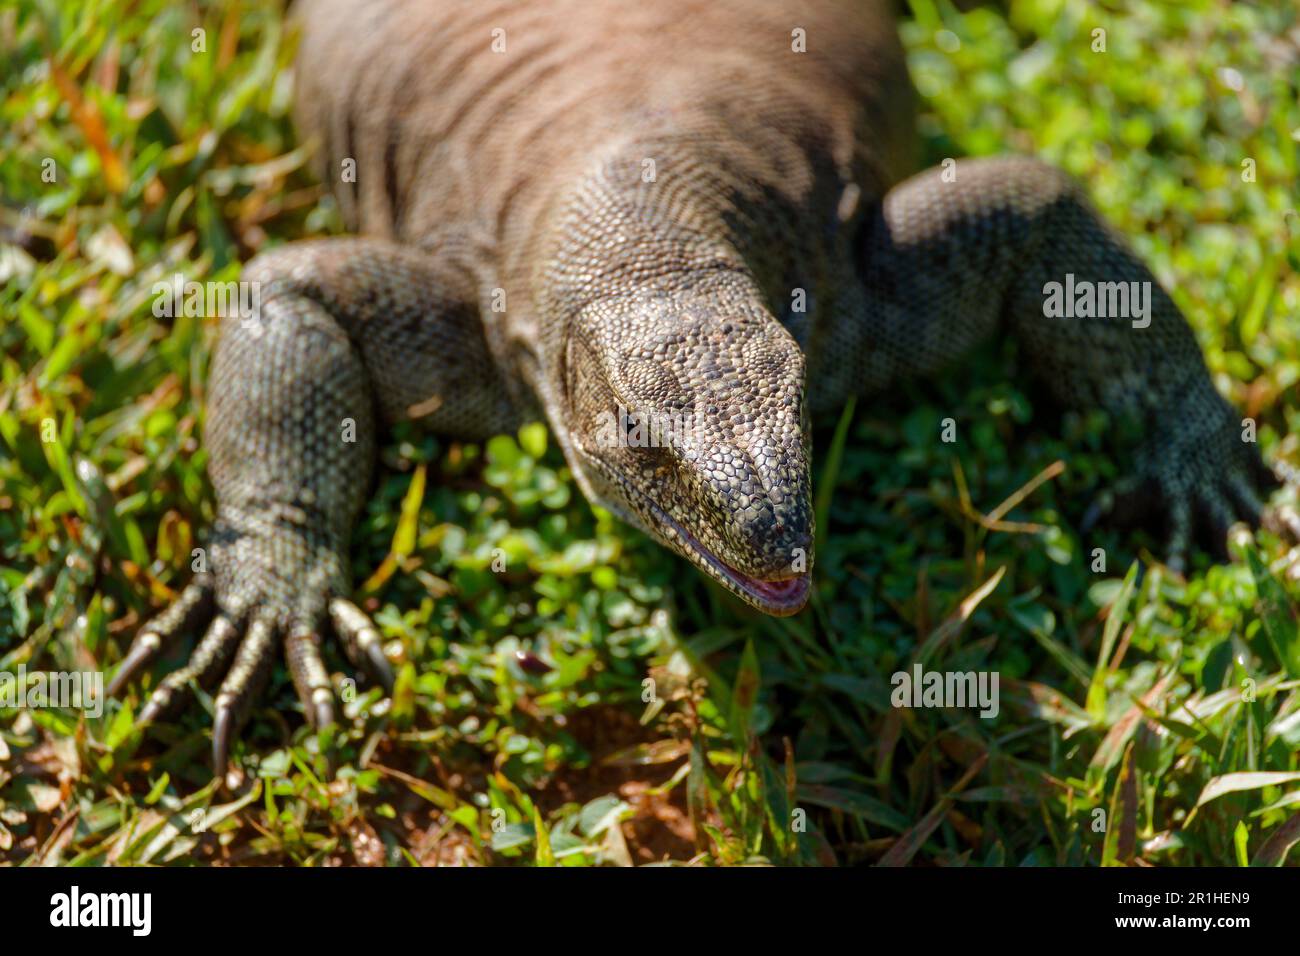 Closeup lizard in Sri Lanka on the grass Stock Photo